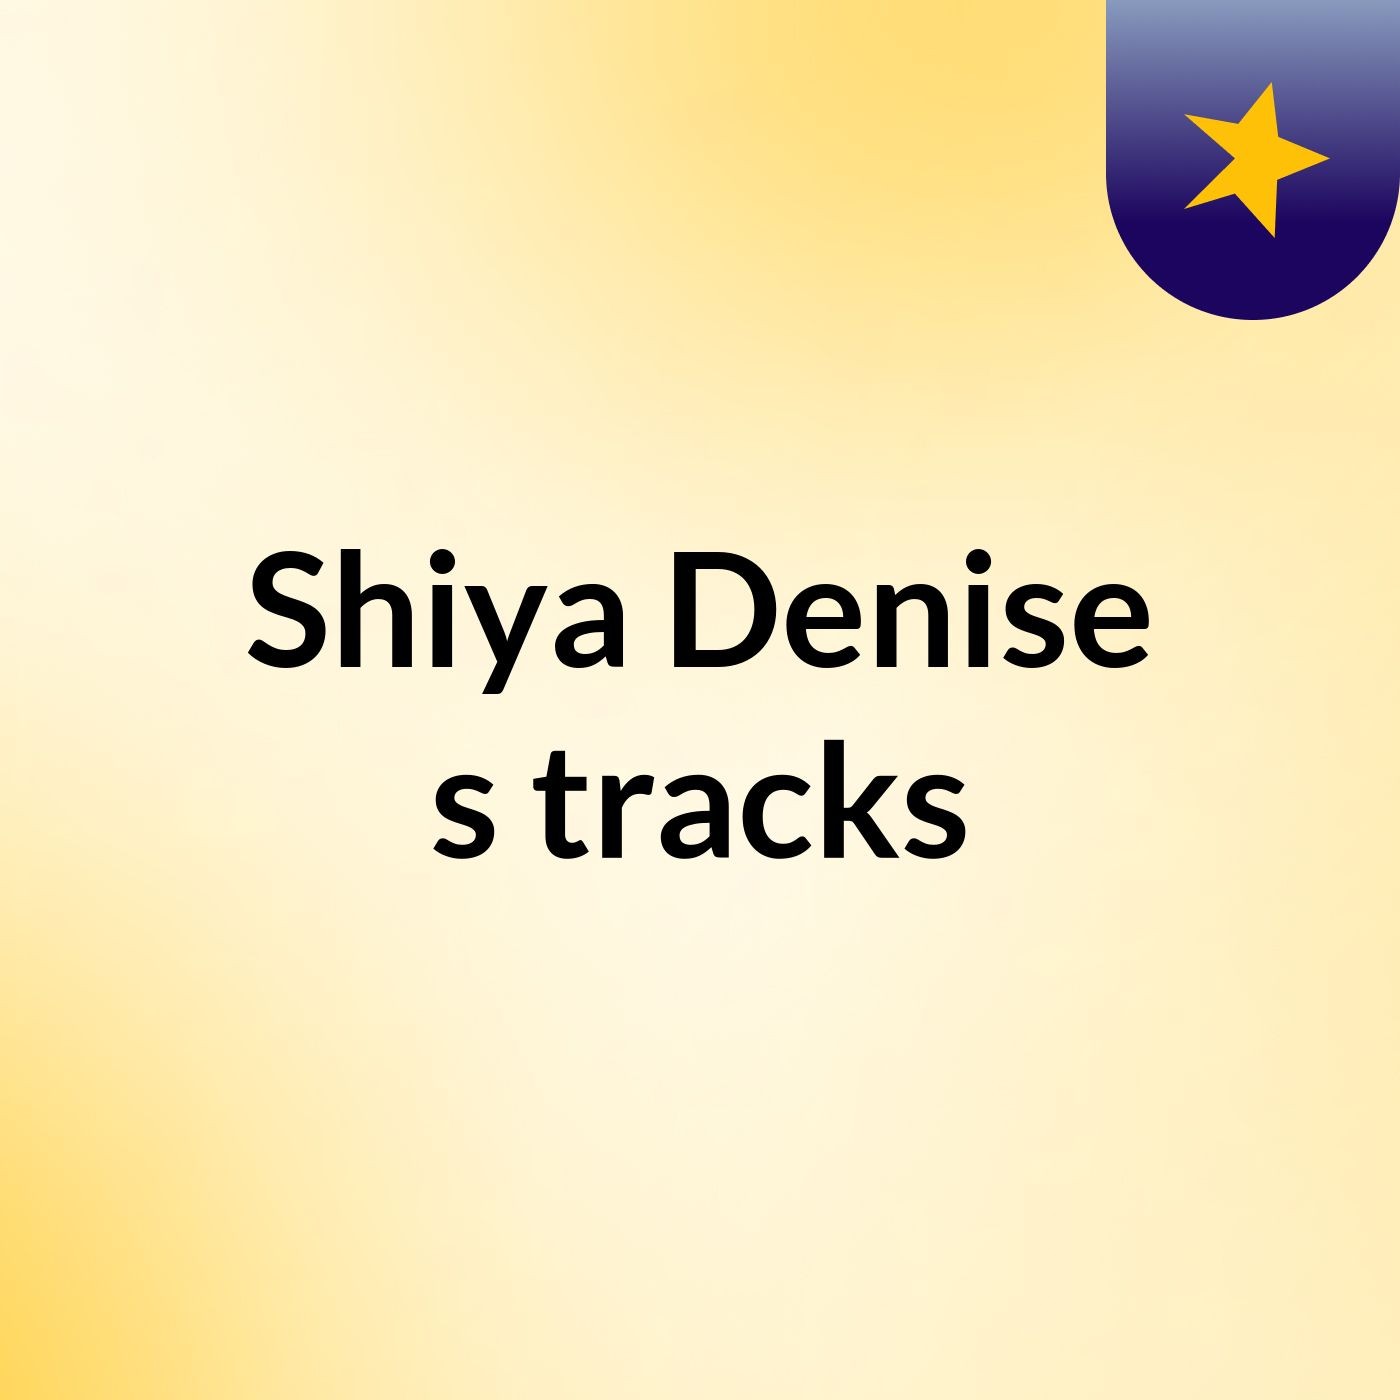 Shiya Denise's tracks